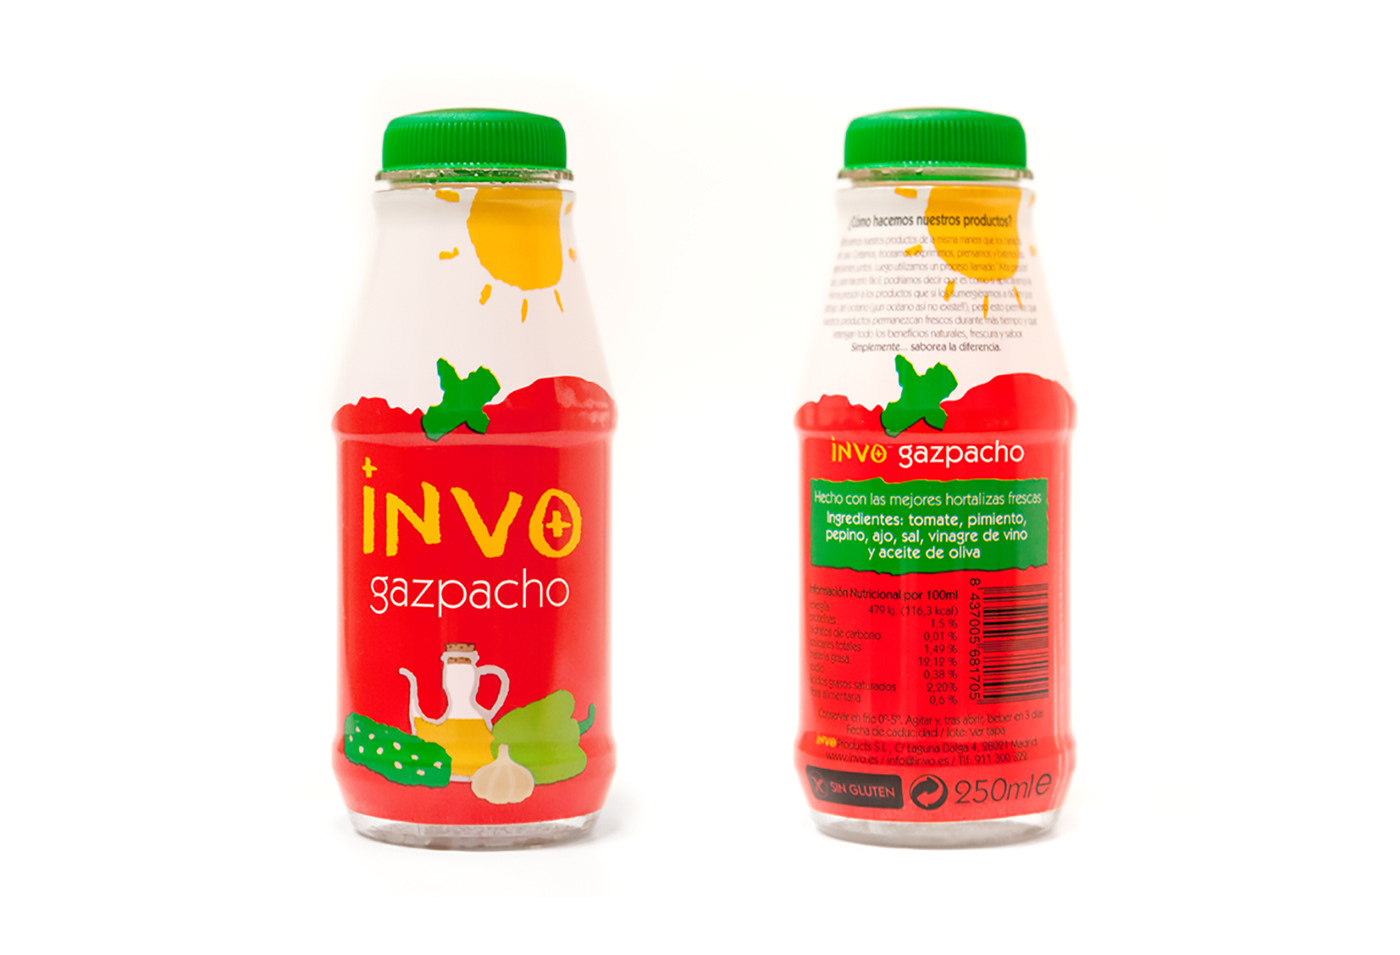 Pack bottle botella Gazpacho invo